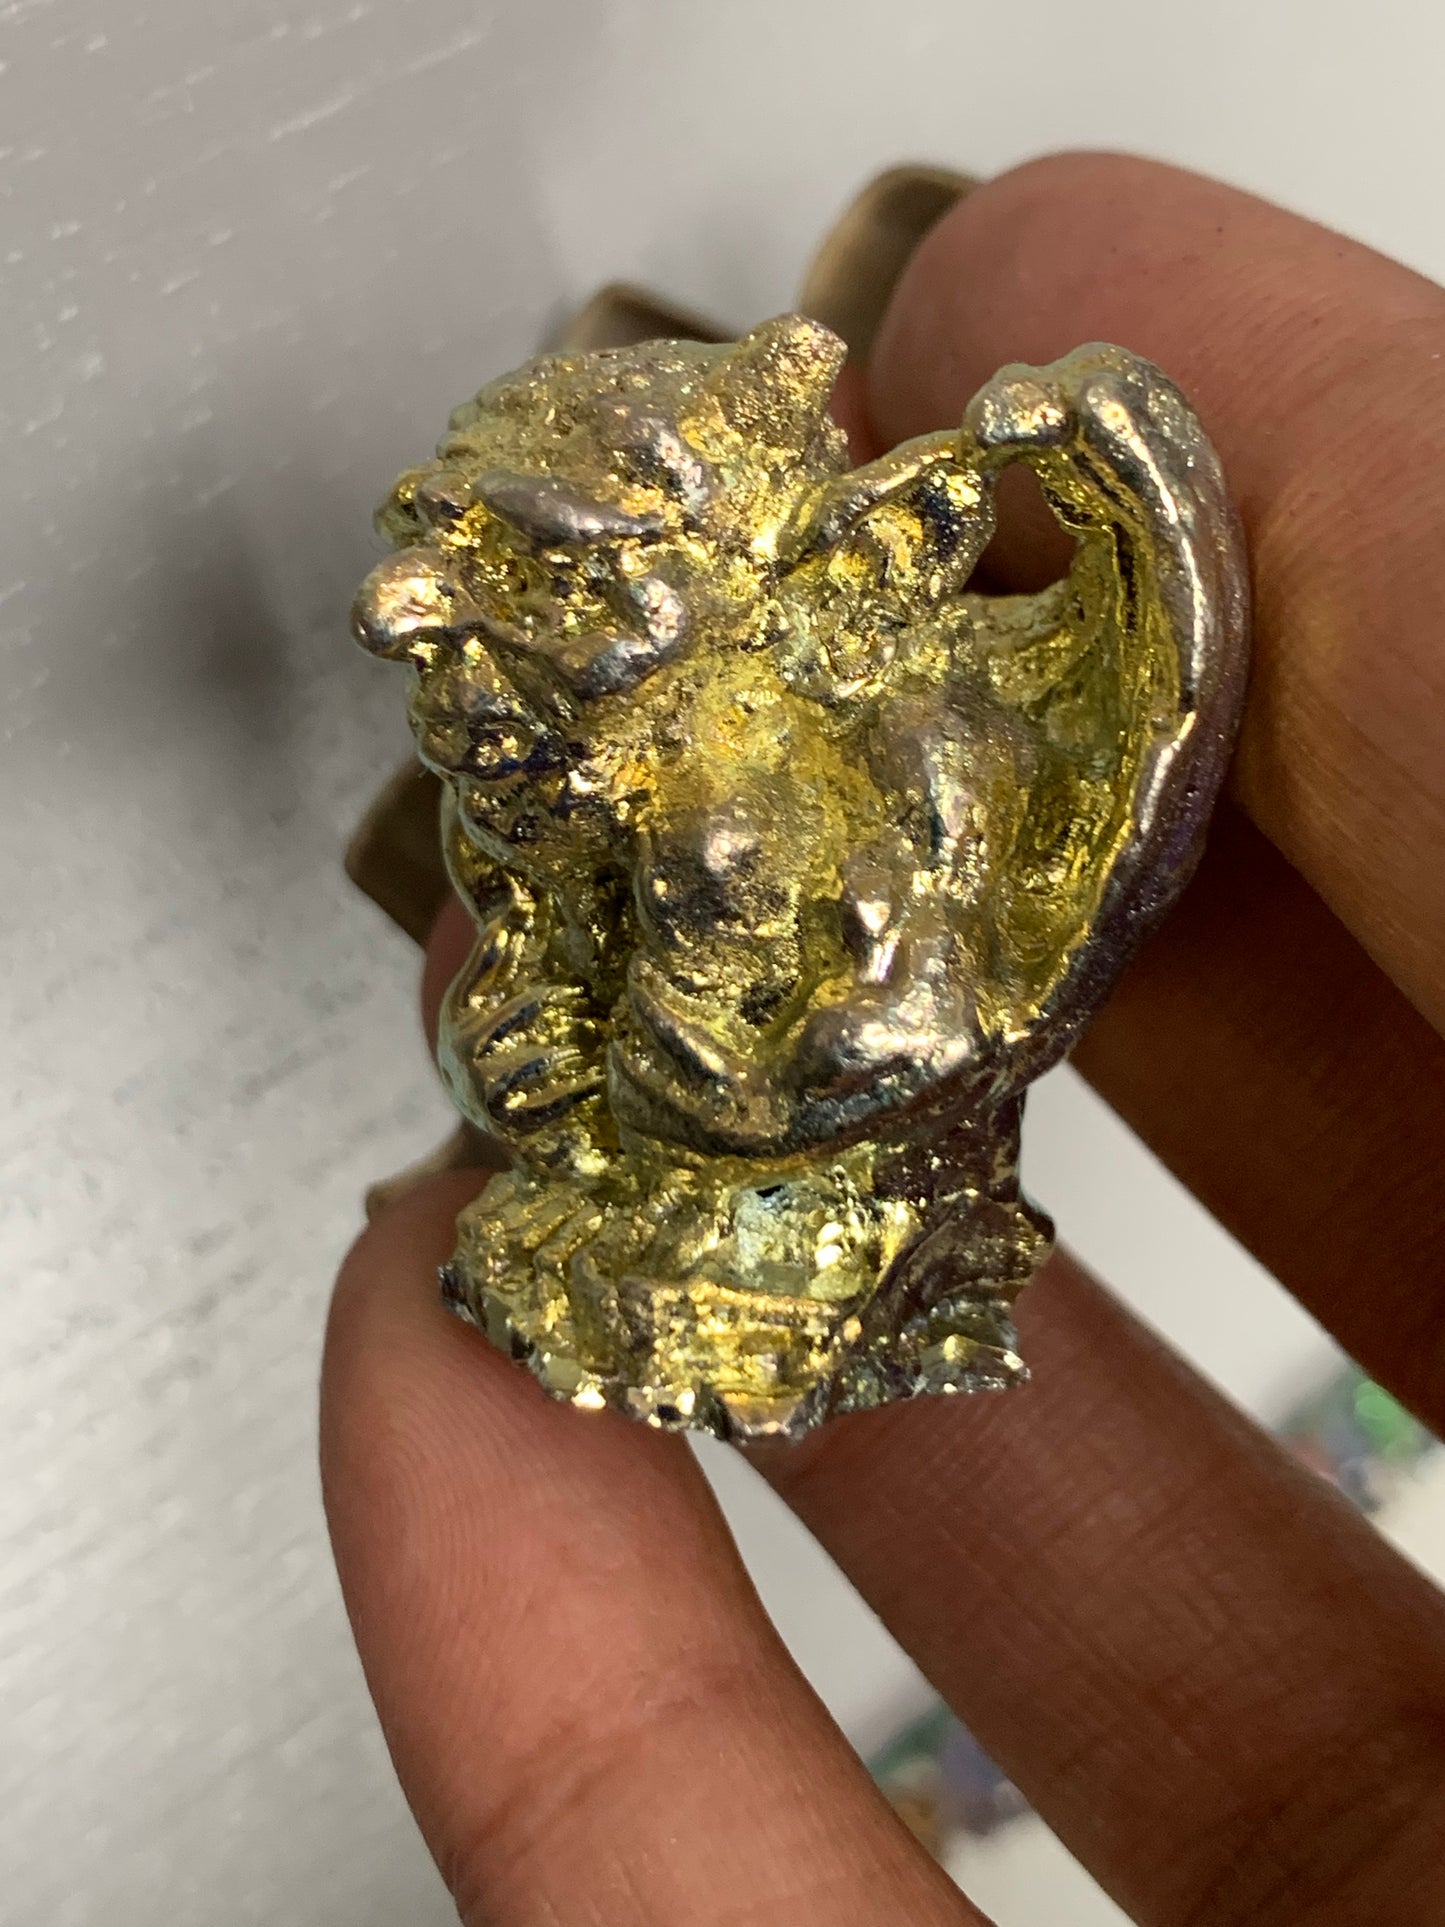 Gold Bismuth Crystal Gargoyle Metal Art Sculpture